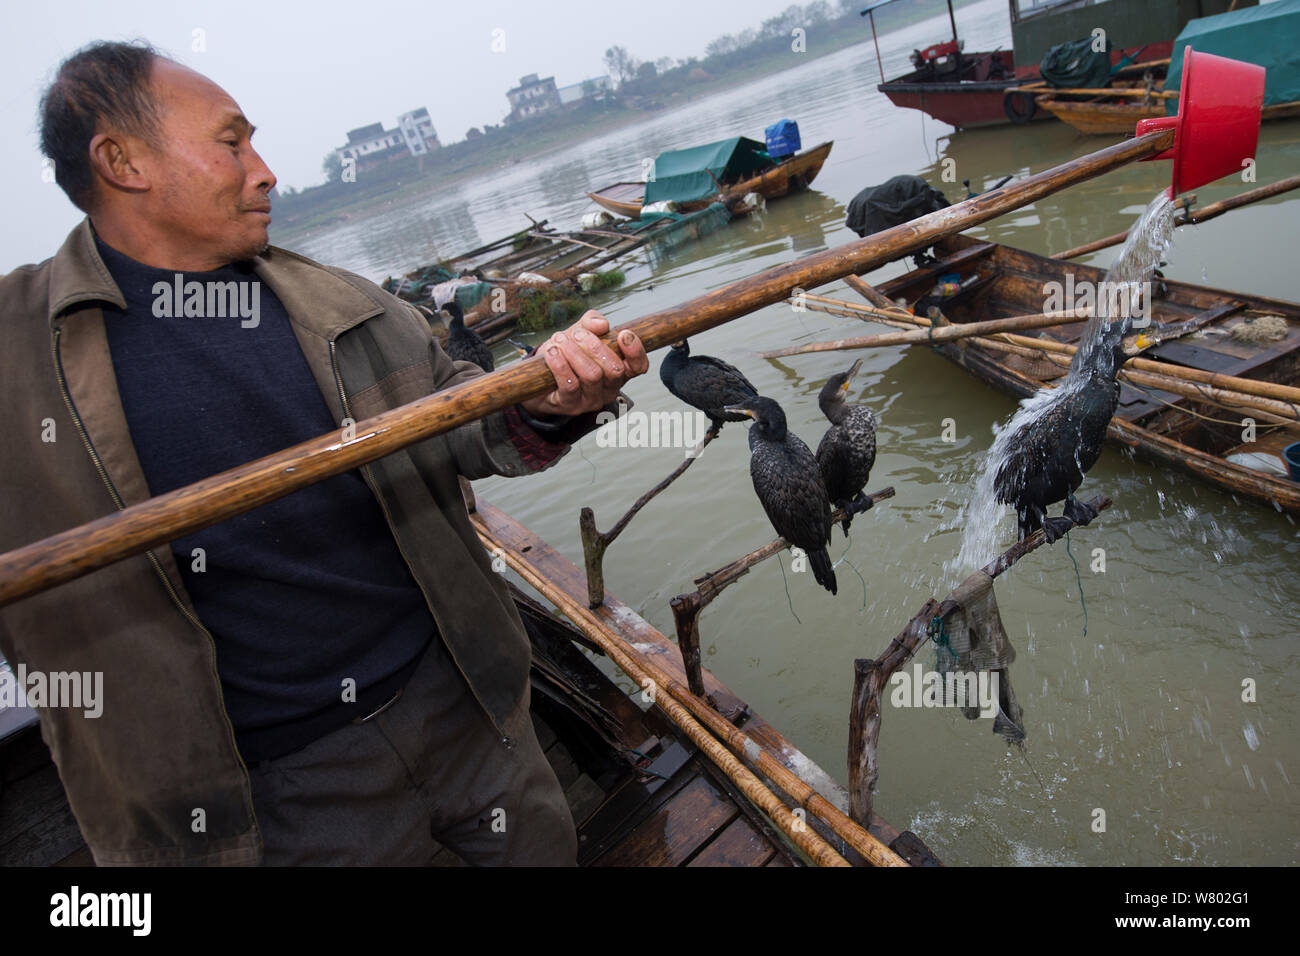 Fishermen fishing using domesticated Cormorants (Phalacrocorax carbo sinensis), washing the cormorants with water, Poyang Ho Lake, Jiangxi province, China Stock Photo